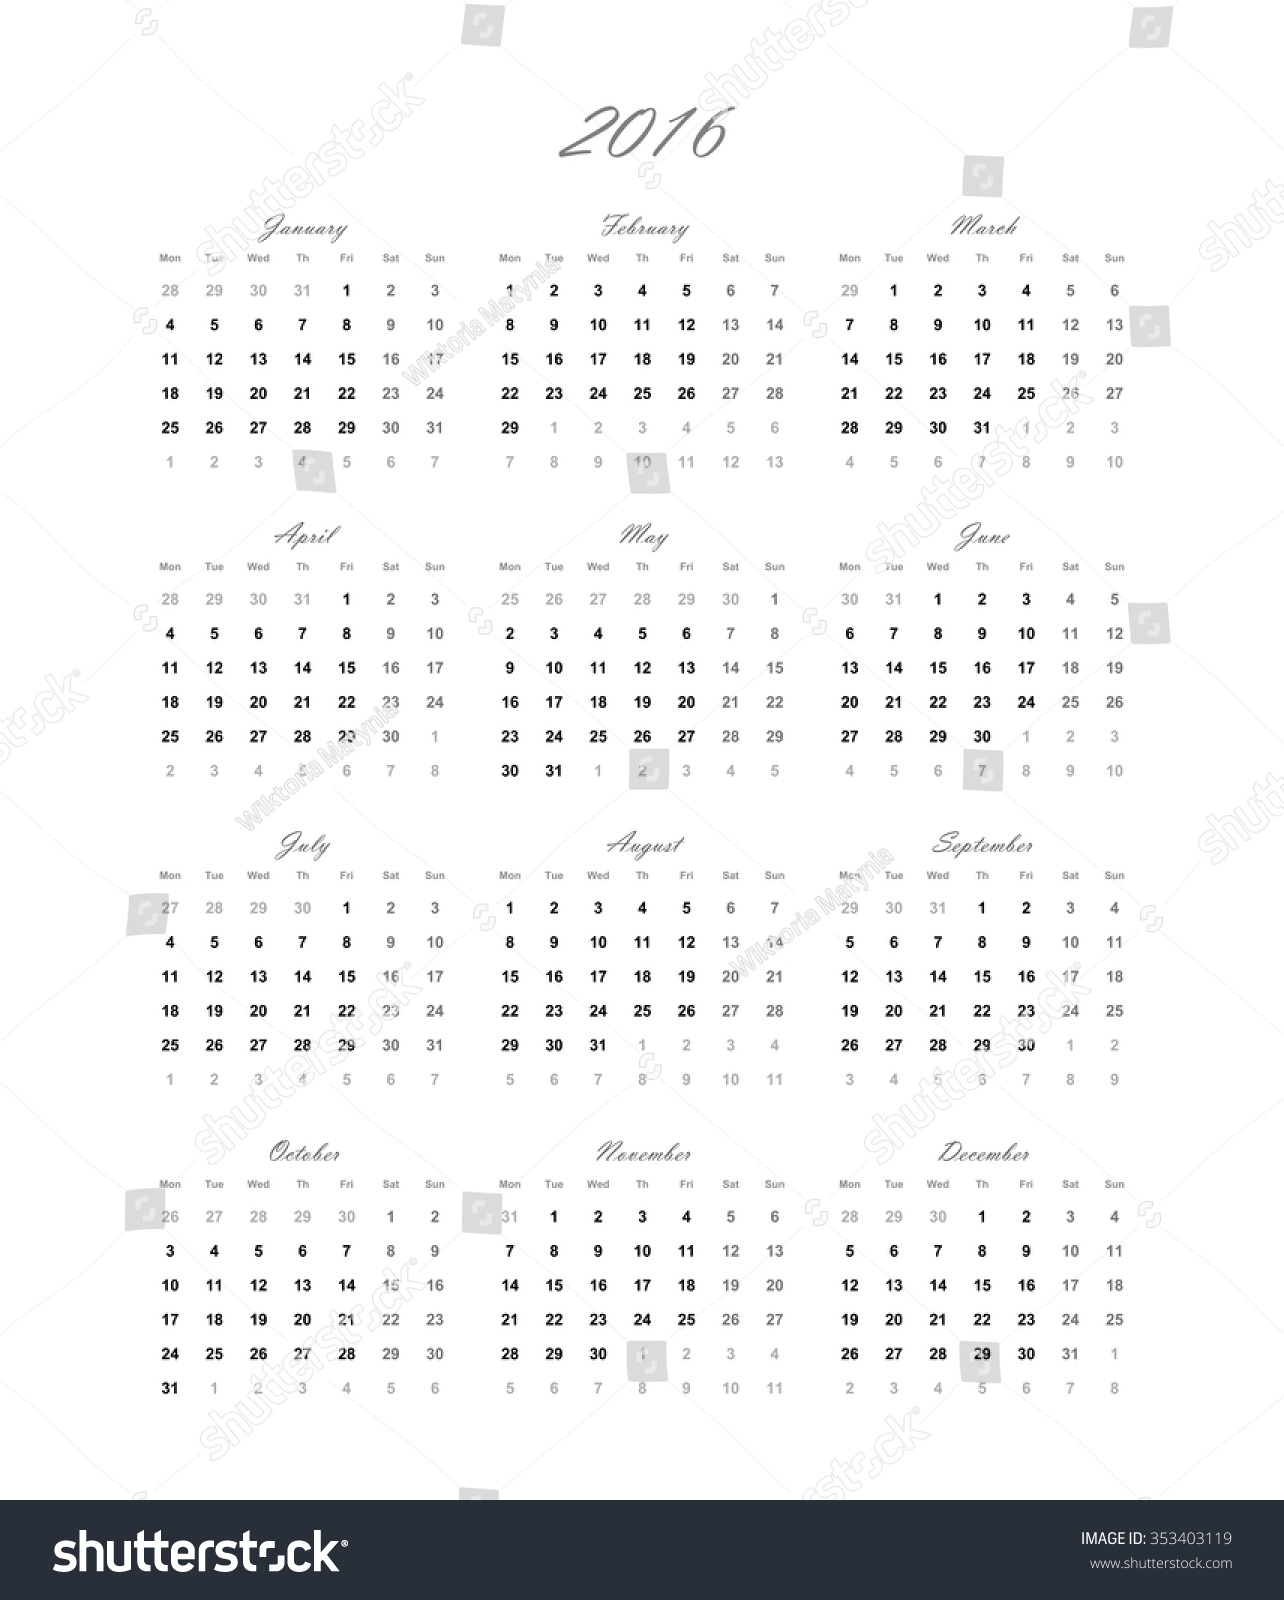 Calendar For 2016 Vector - 353403119 : Shutterstock